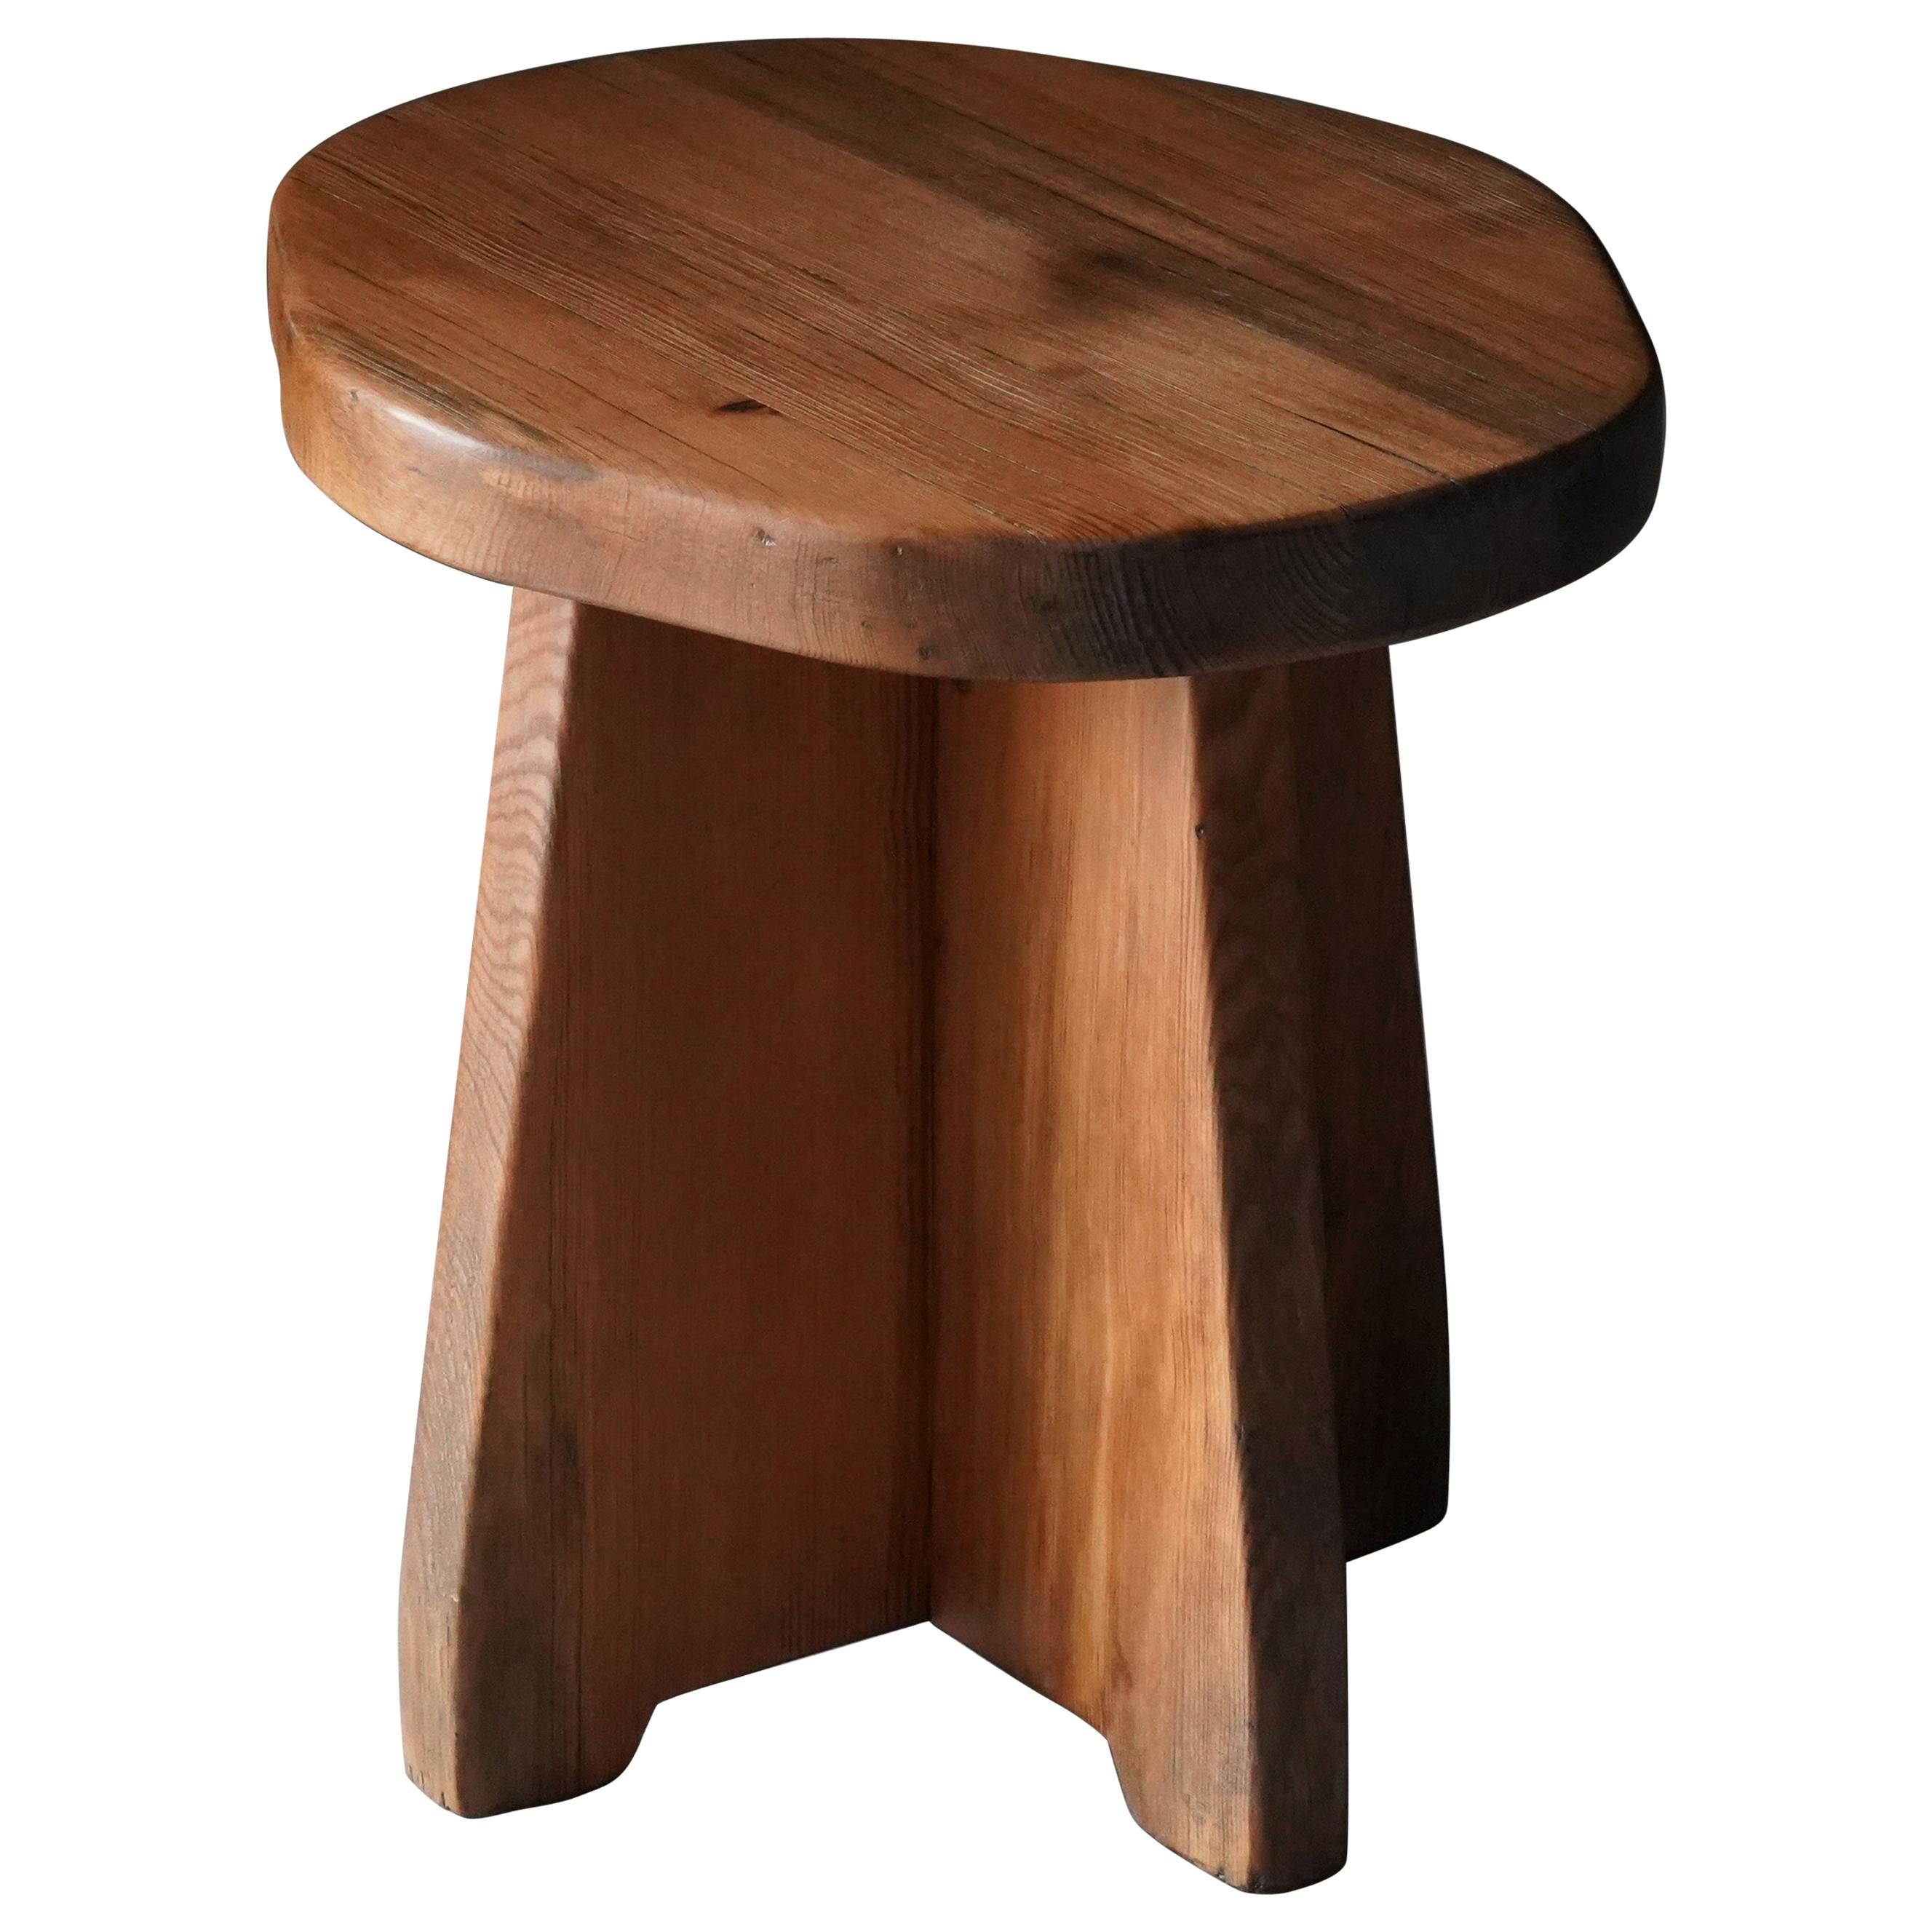 David Rosén, Rare Modernist Stool or Side Table, Pine, Nordiska Kompaniet, 1930s